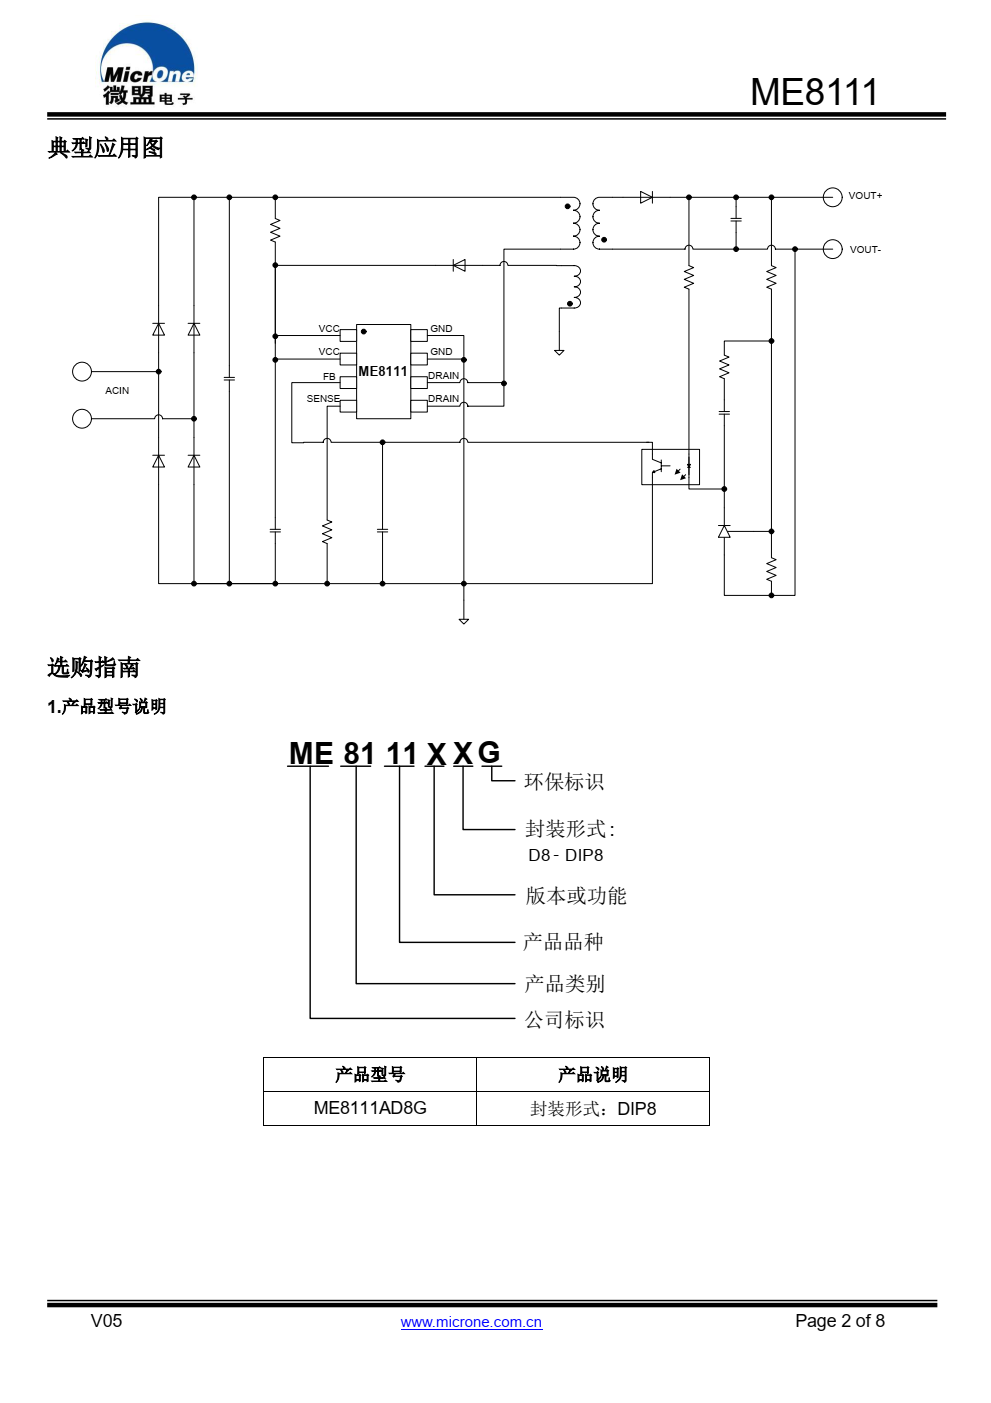 ME8111 是一个高性能电流模式 PWM 控制器，内 置 600V/4A 功率 MOSFET